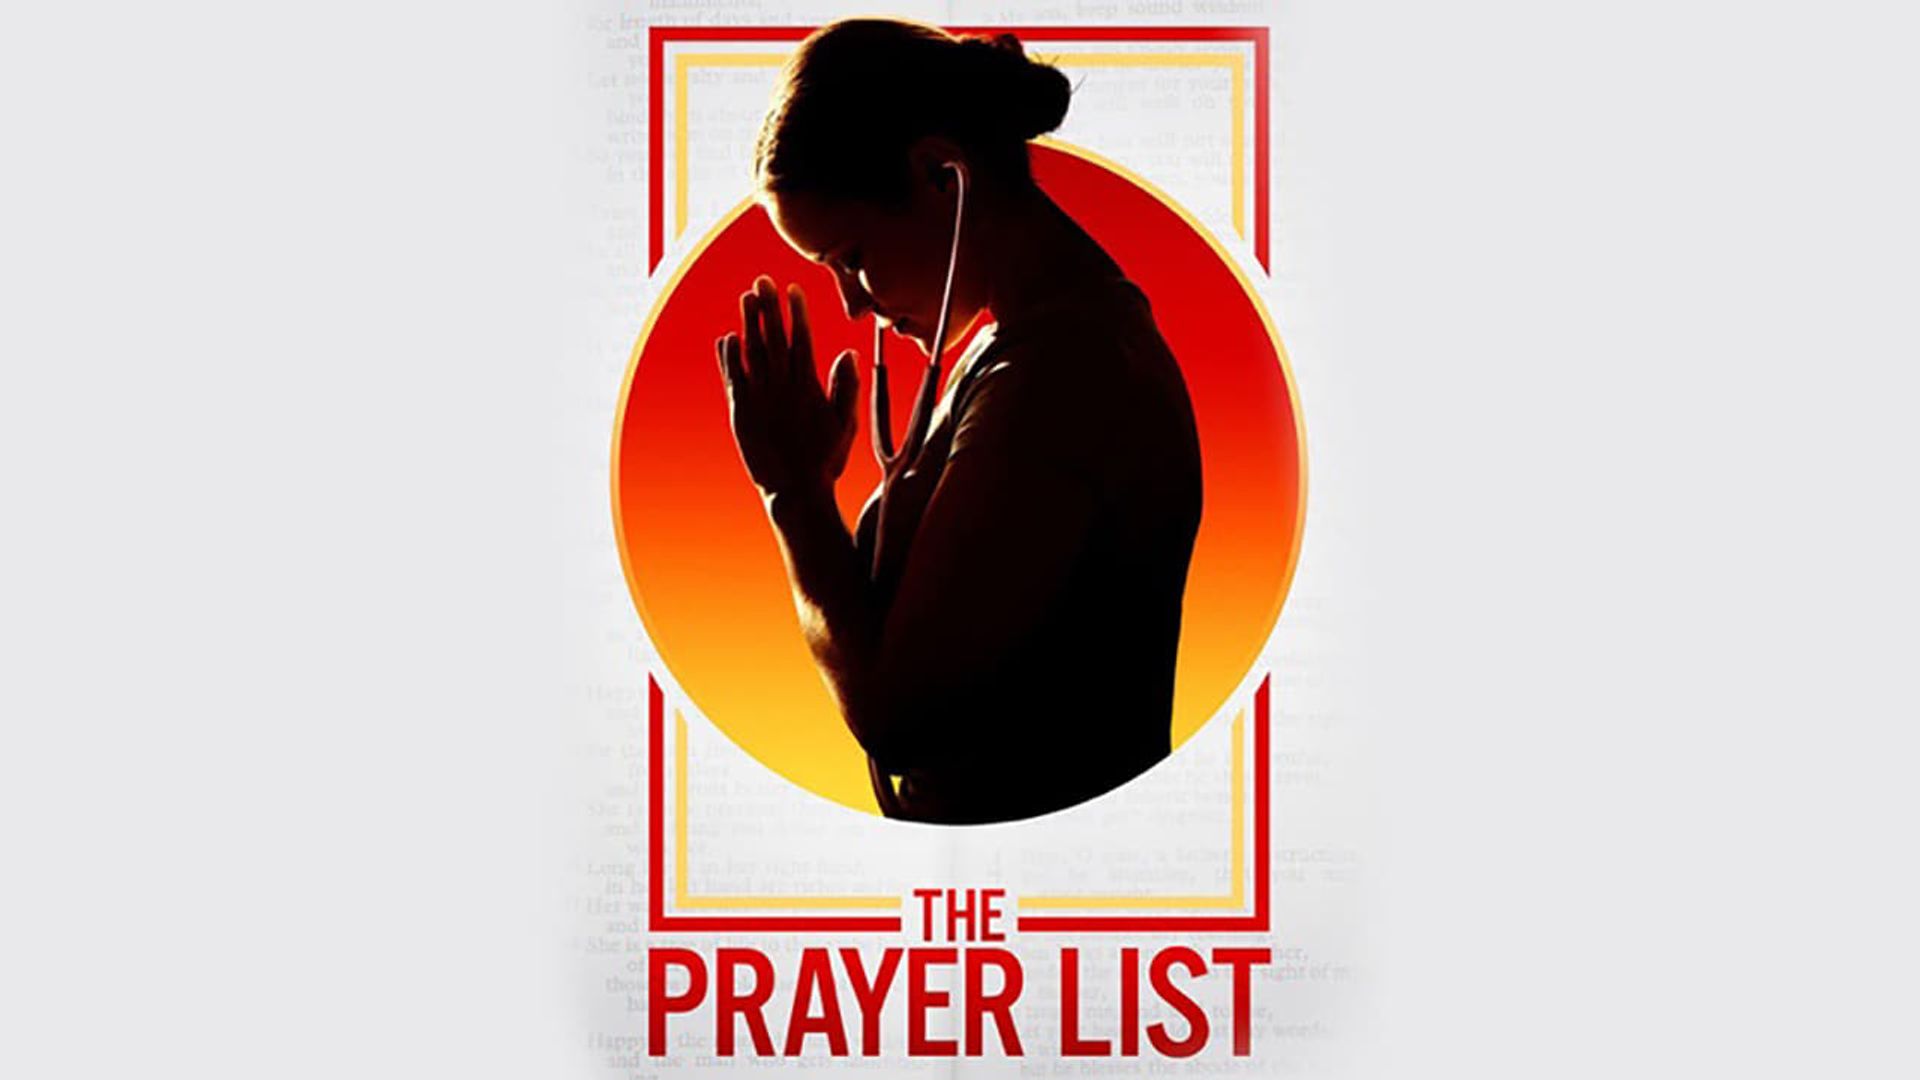 The Prayer List background